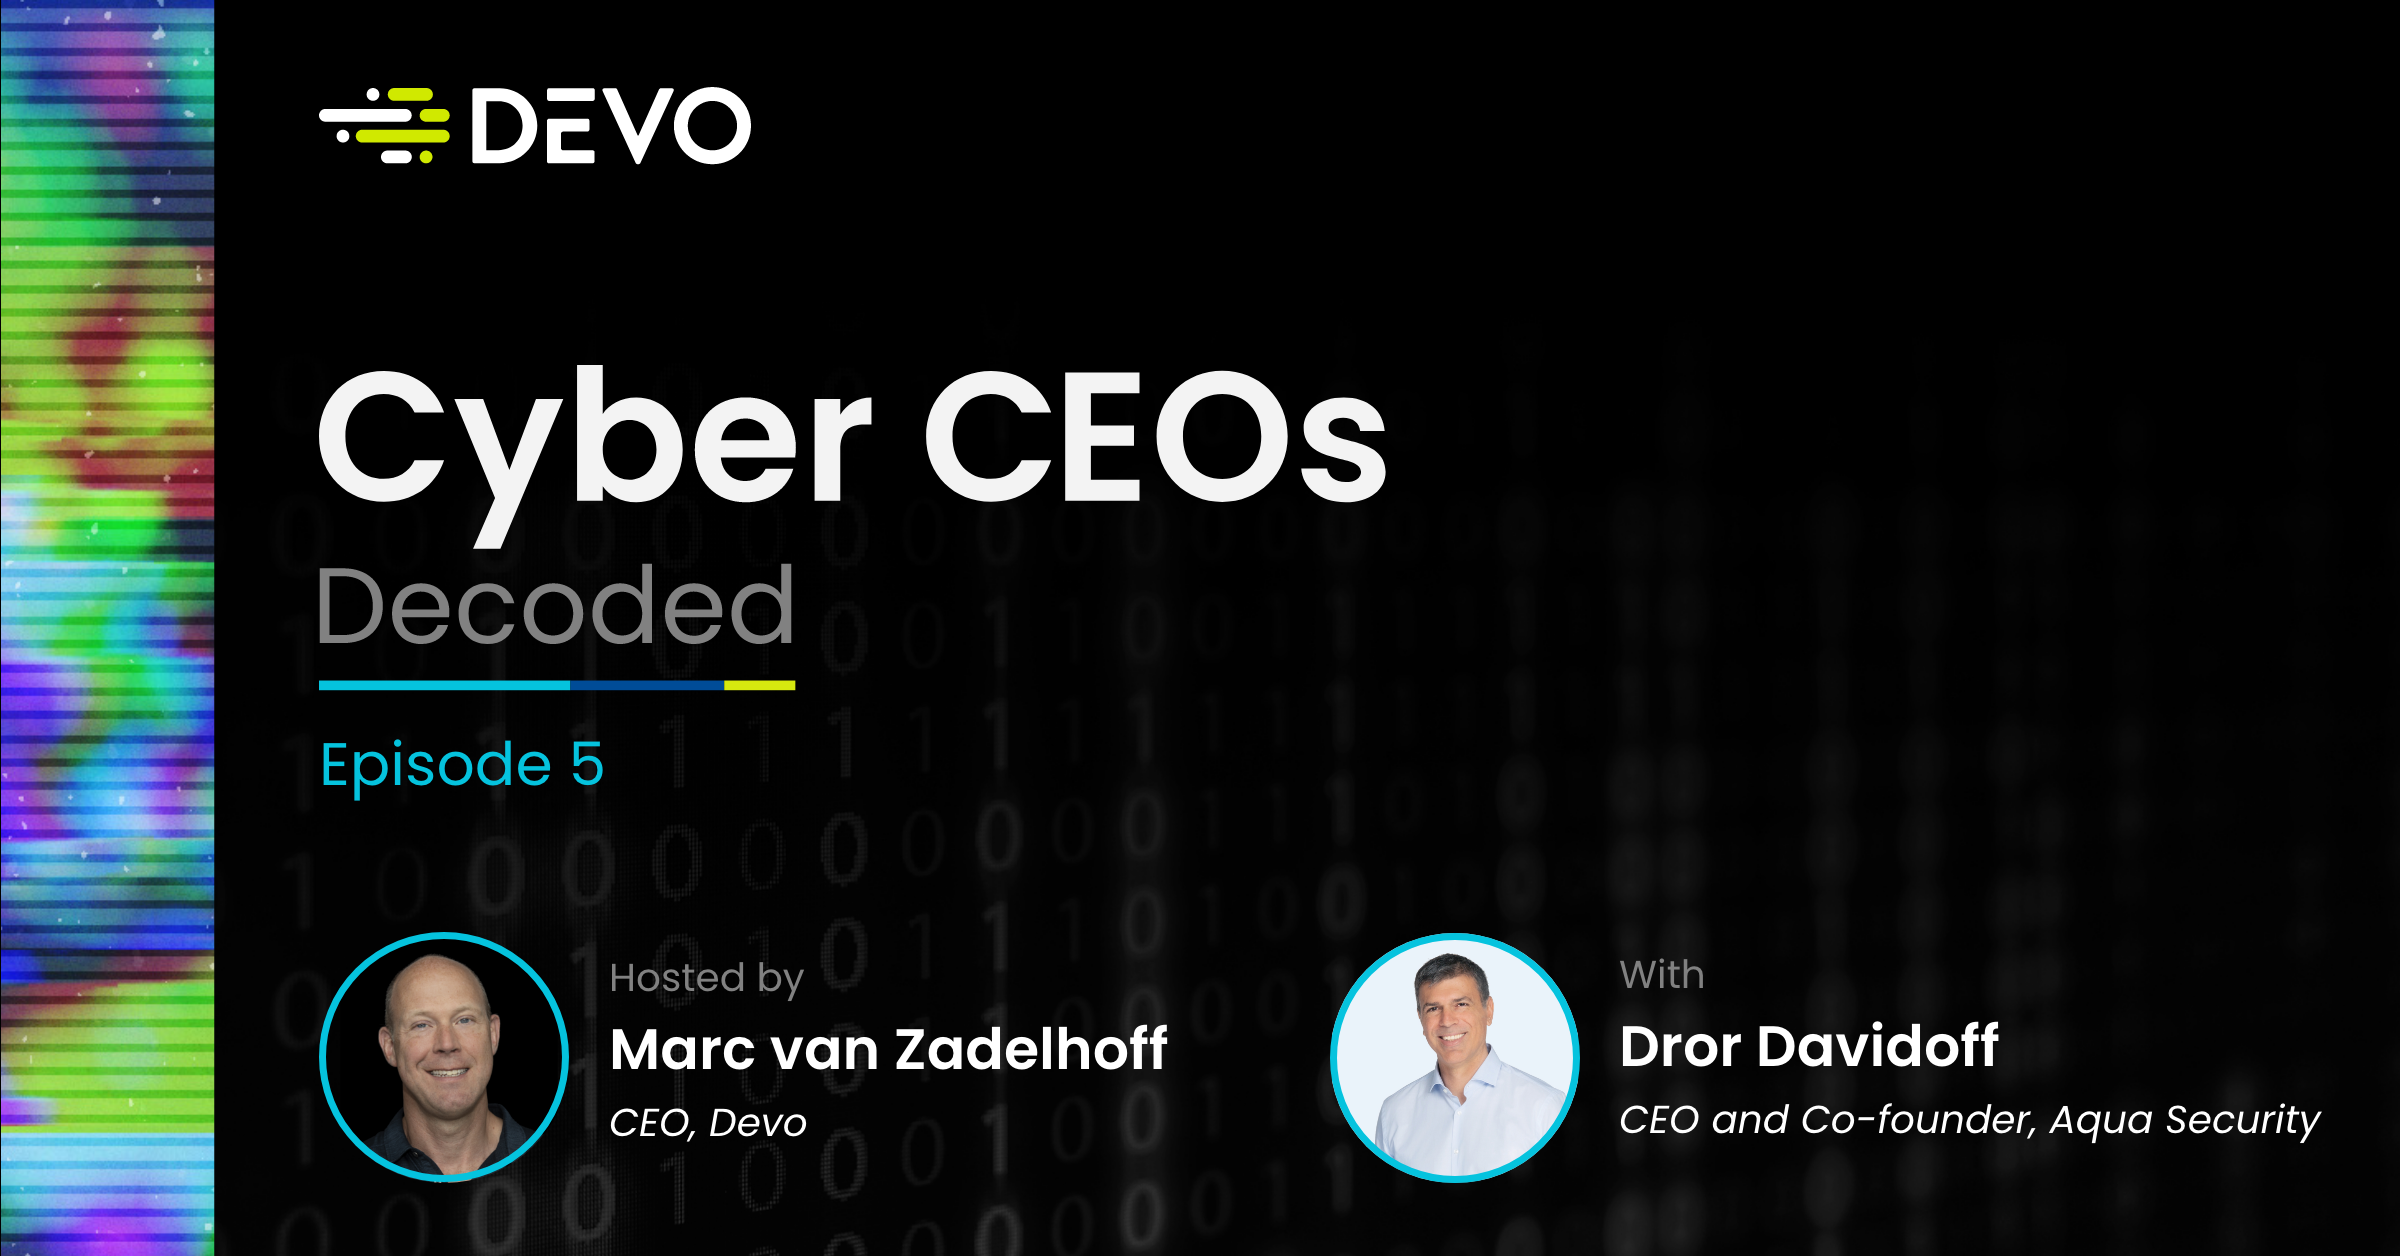 Cyber CEOs Decoded Episode 5 - Dror Davidoff